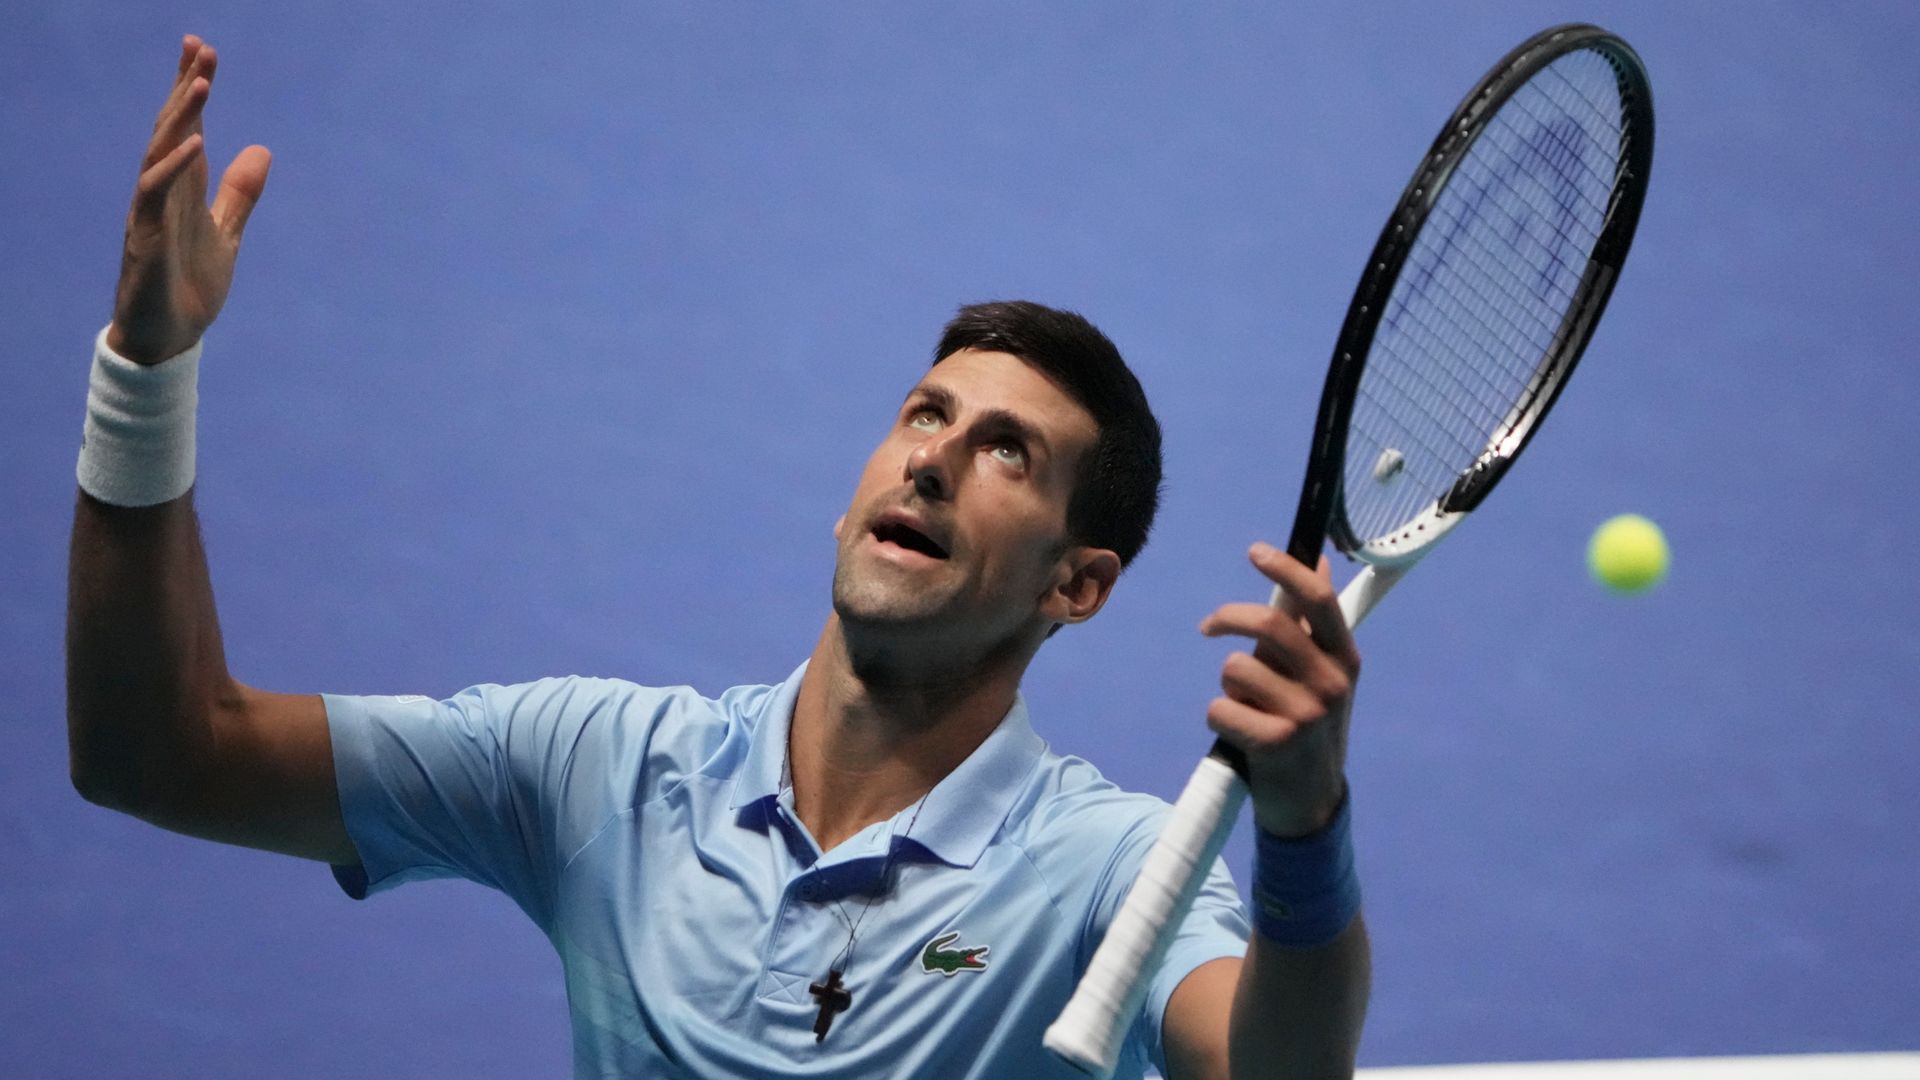 Djokovic beats Cilic in Israel to seal first title since Wimbledon